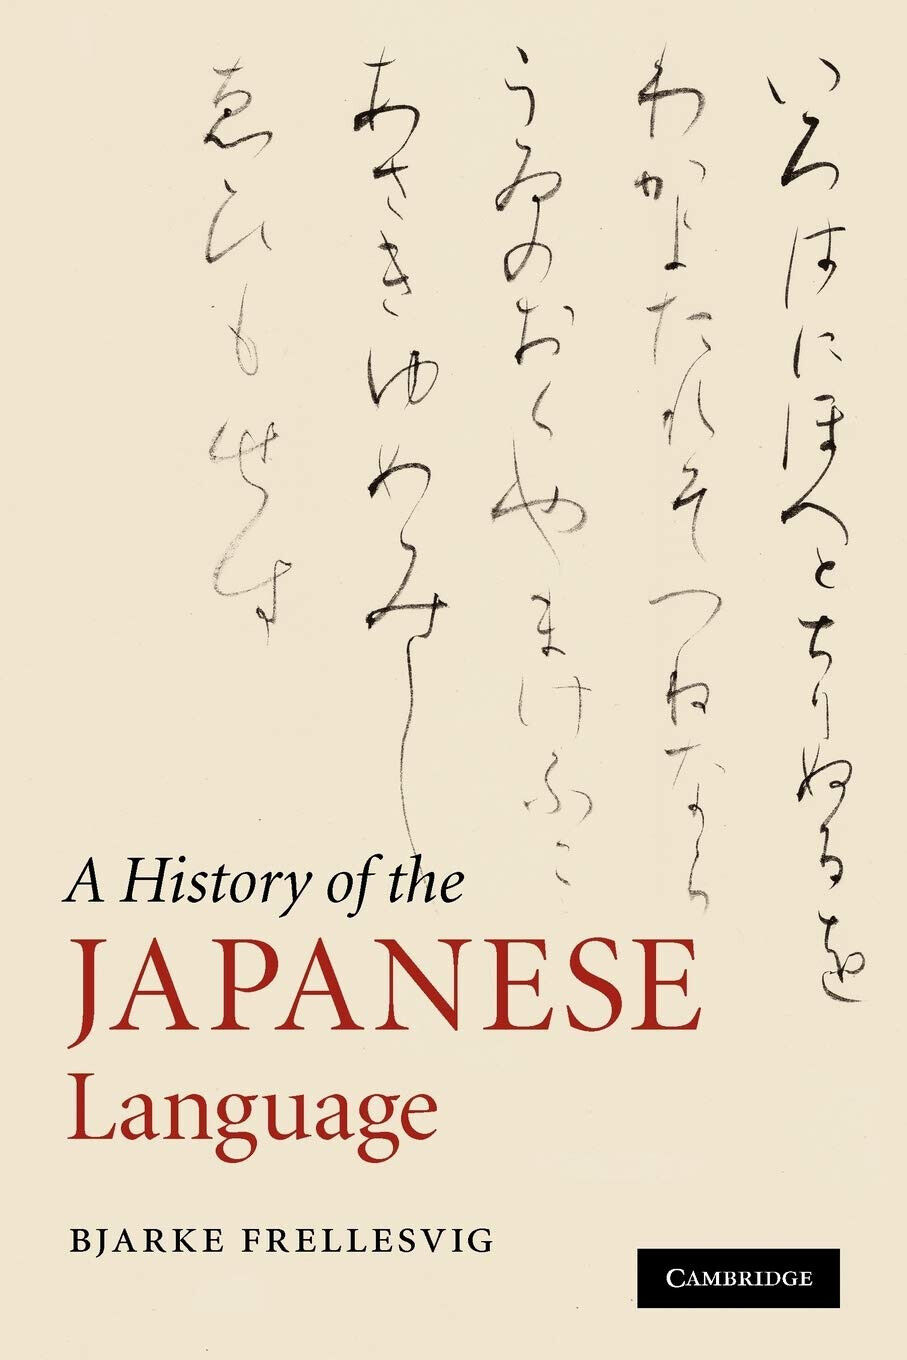 A History of the Japanese Language - Bjarke Frellesvig - Cambridge, 2011